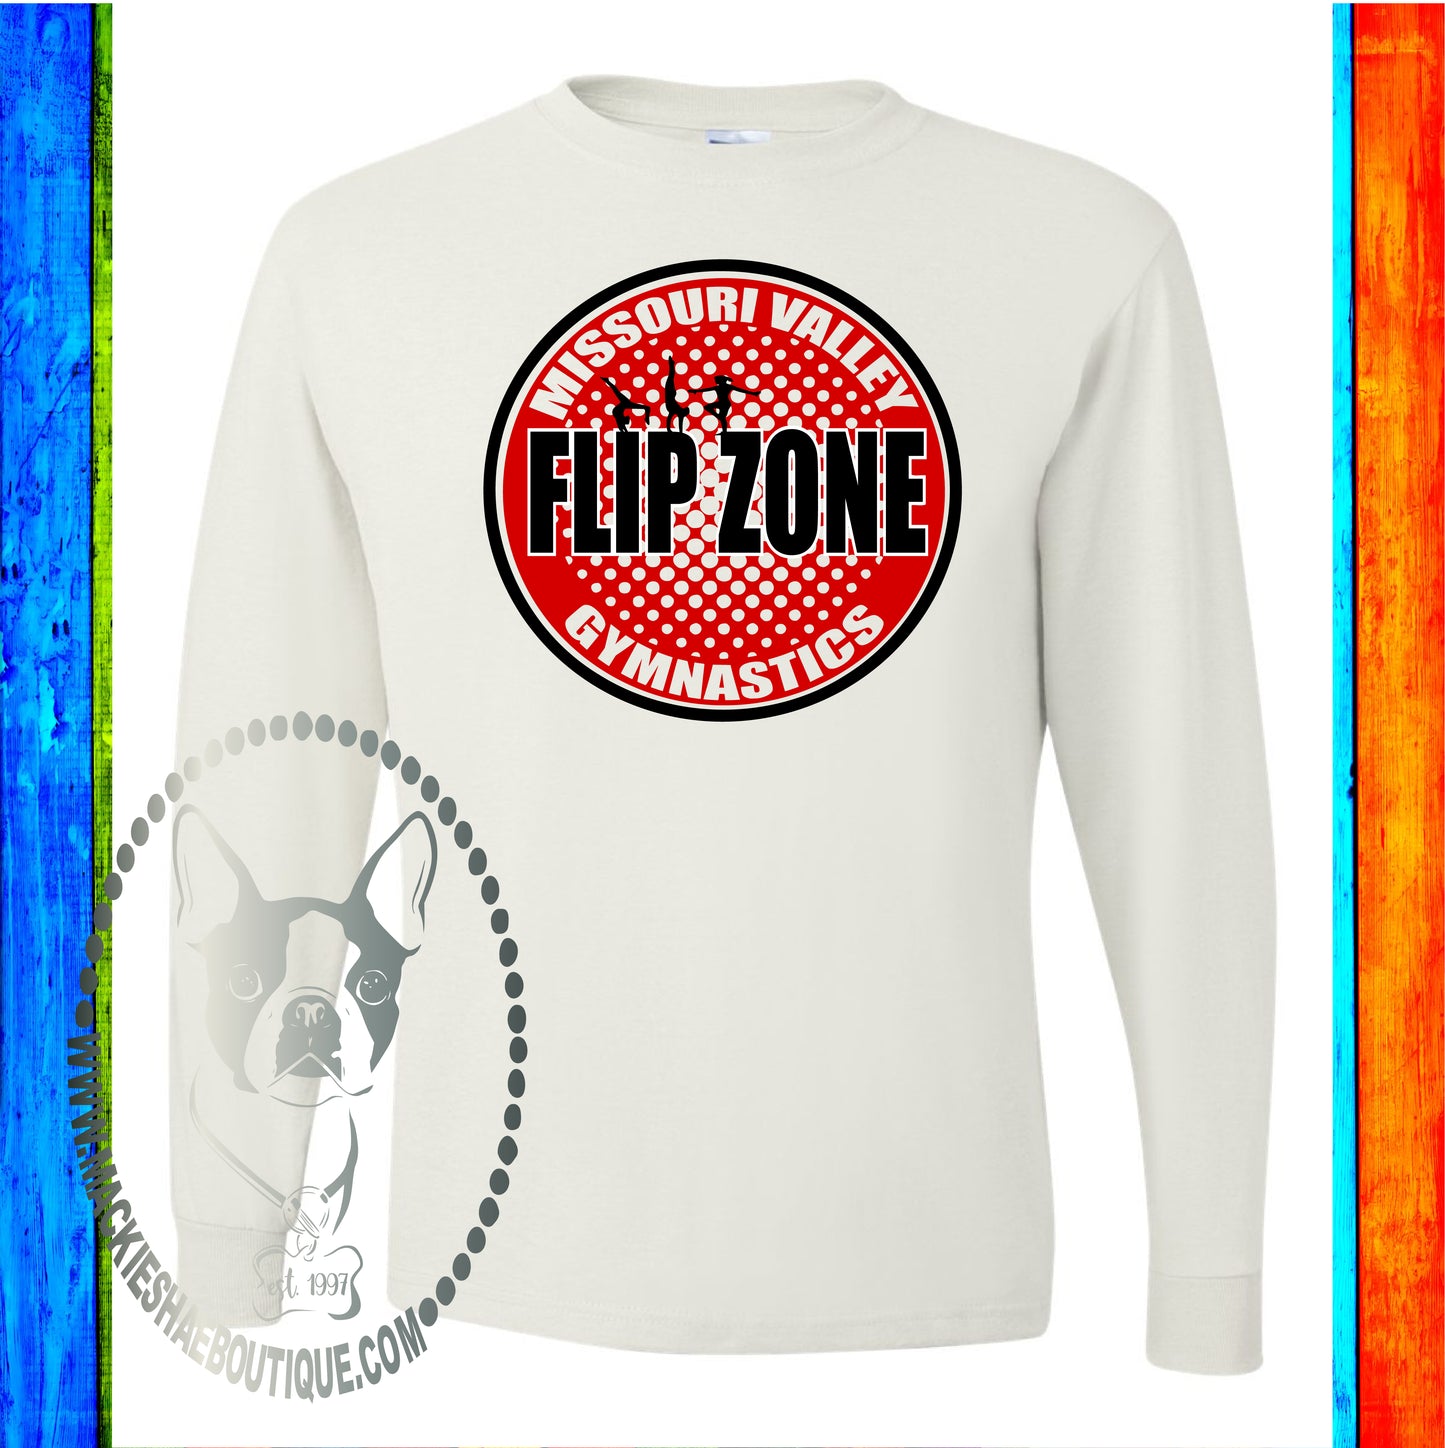 Flip Zone Gymnastics Missouri Valley Custom Shirt, Long Sleeve Tee for Kids and Adult